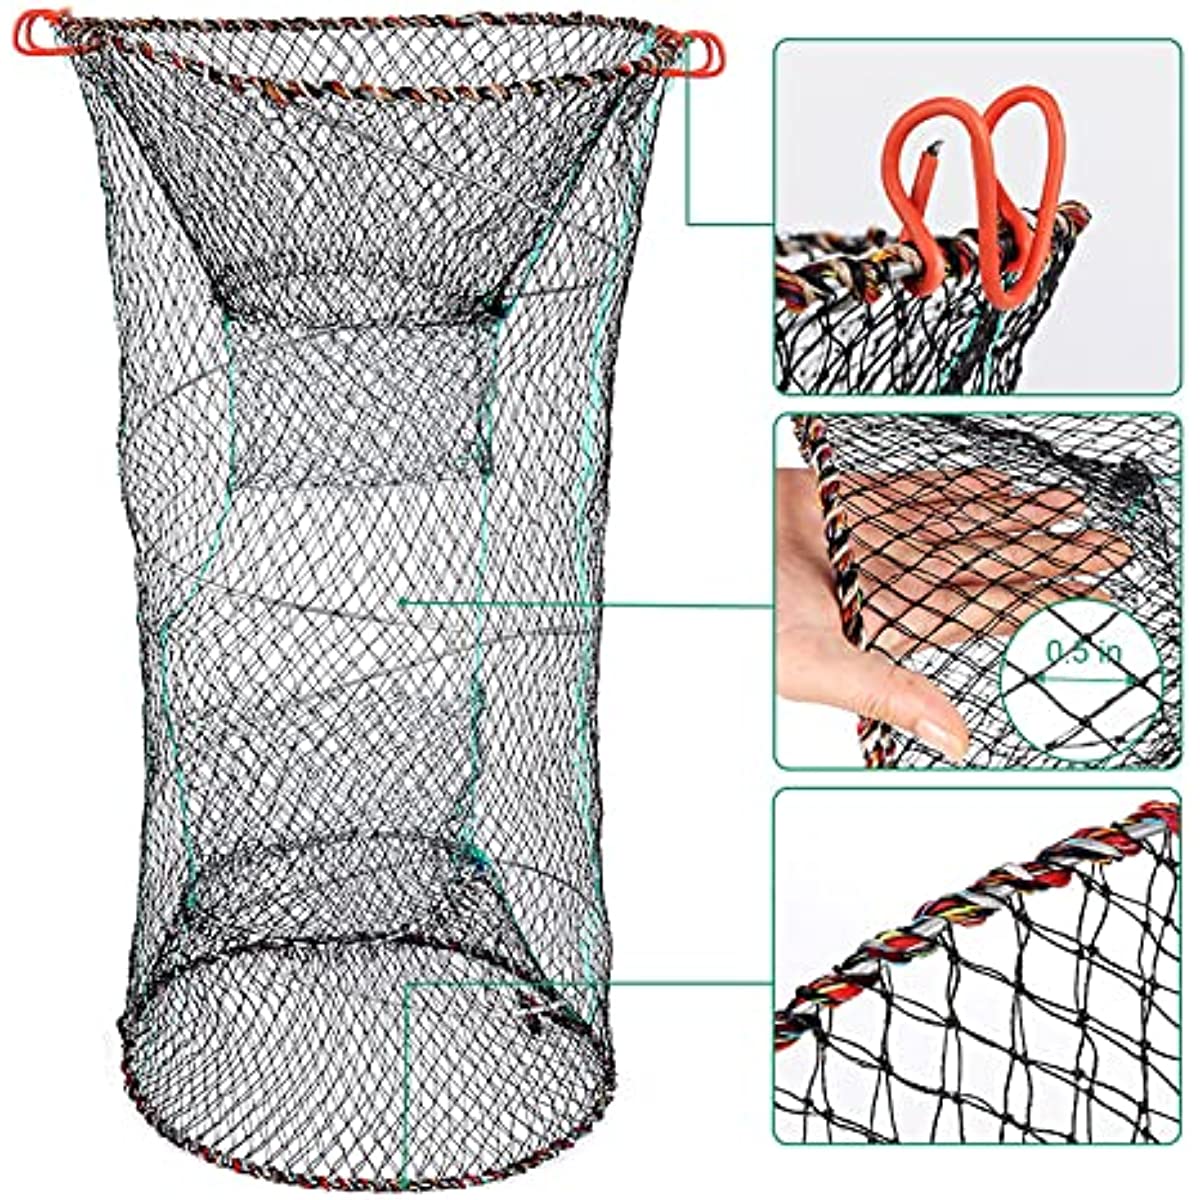 iMountek Fishing Trap Net 6 Holes Fishing Gear Folded Automatic Fishing  Bait Trap Shrimp Minnow Crab Bait Net Crayfish Cast Mesh Trap 